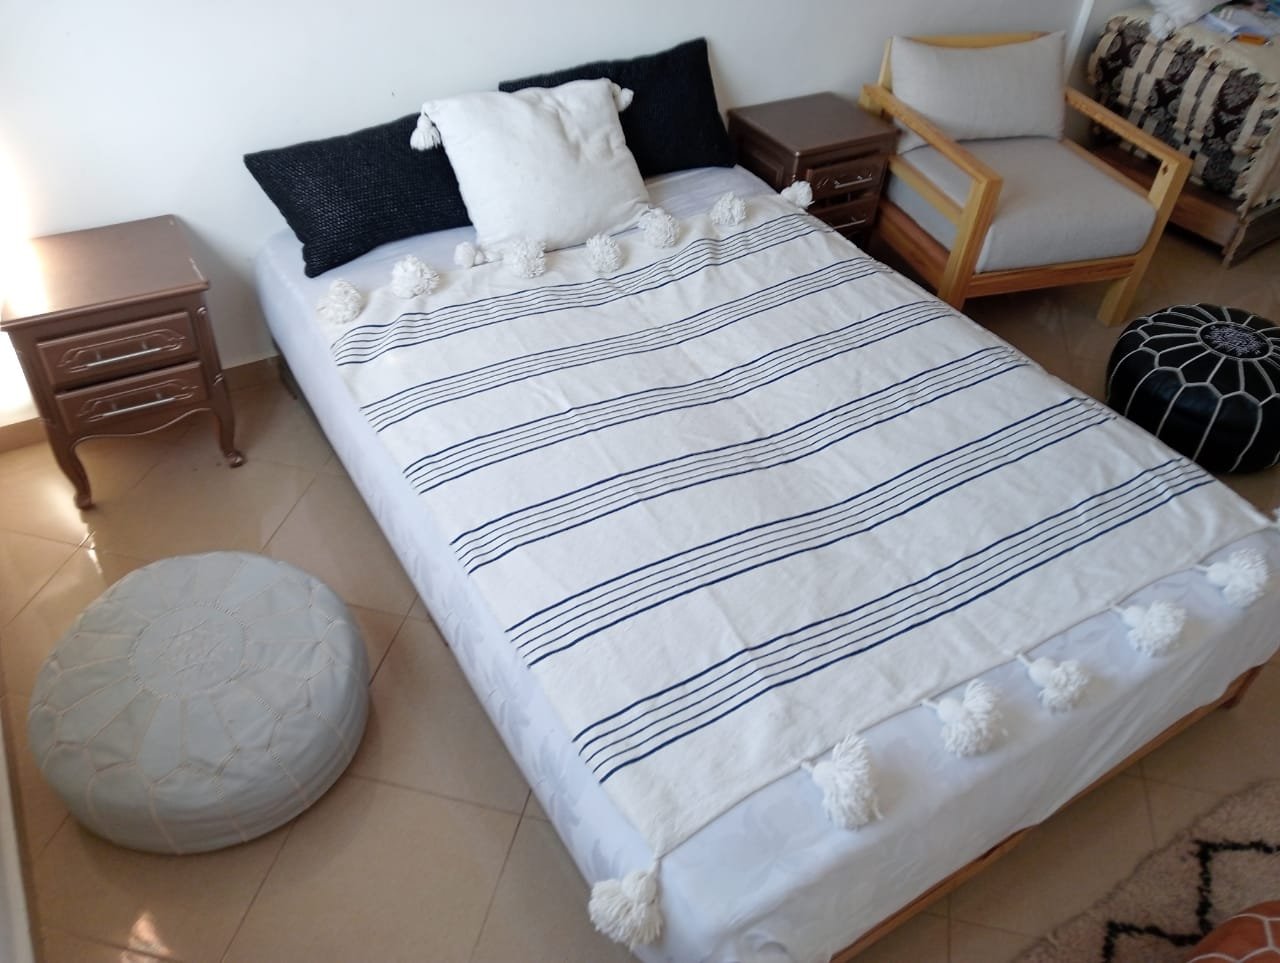 Harbach- Bedspread and Pillows.jpg